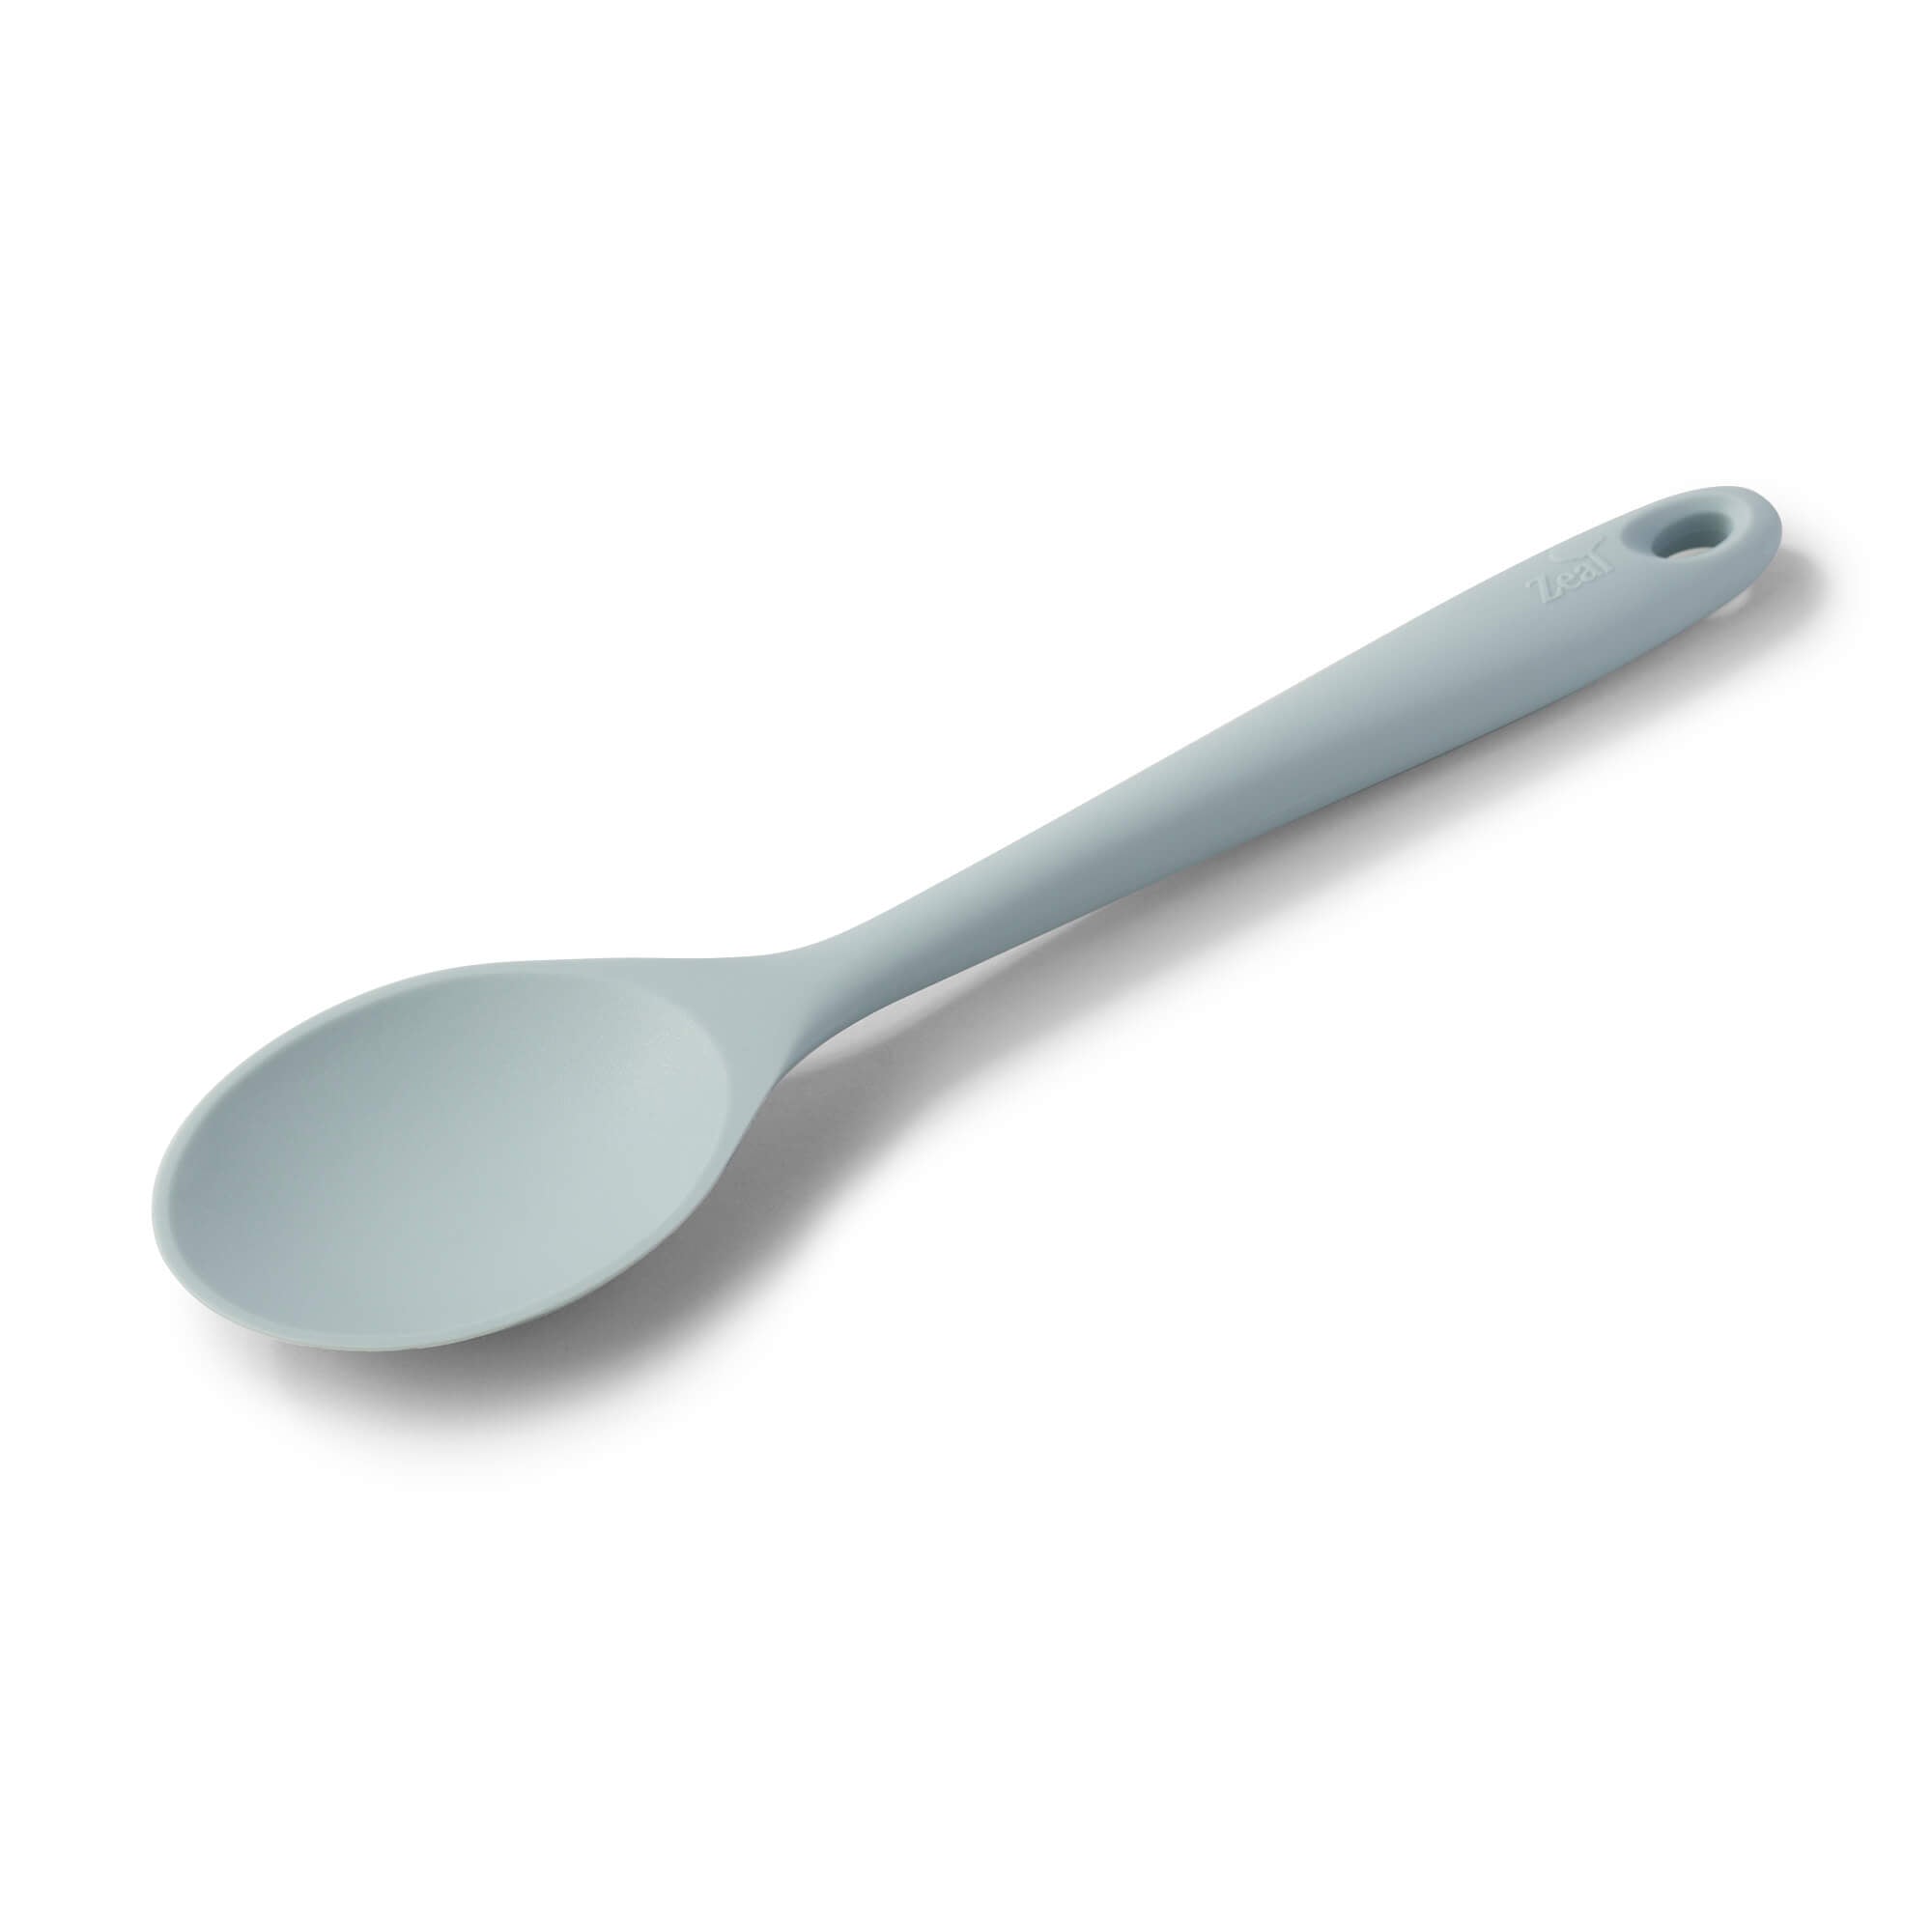 Zeal Measuring Spoon Set, Silicone, Neutral Multi, 11 x 4.7 x 5.5 cm